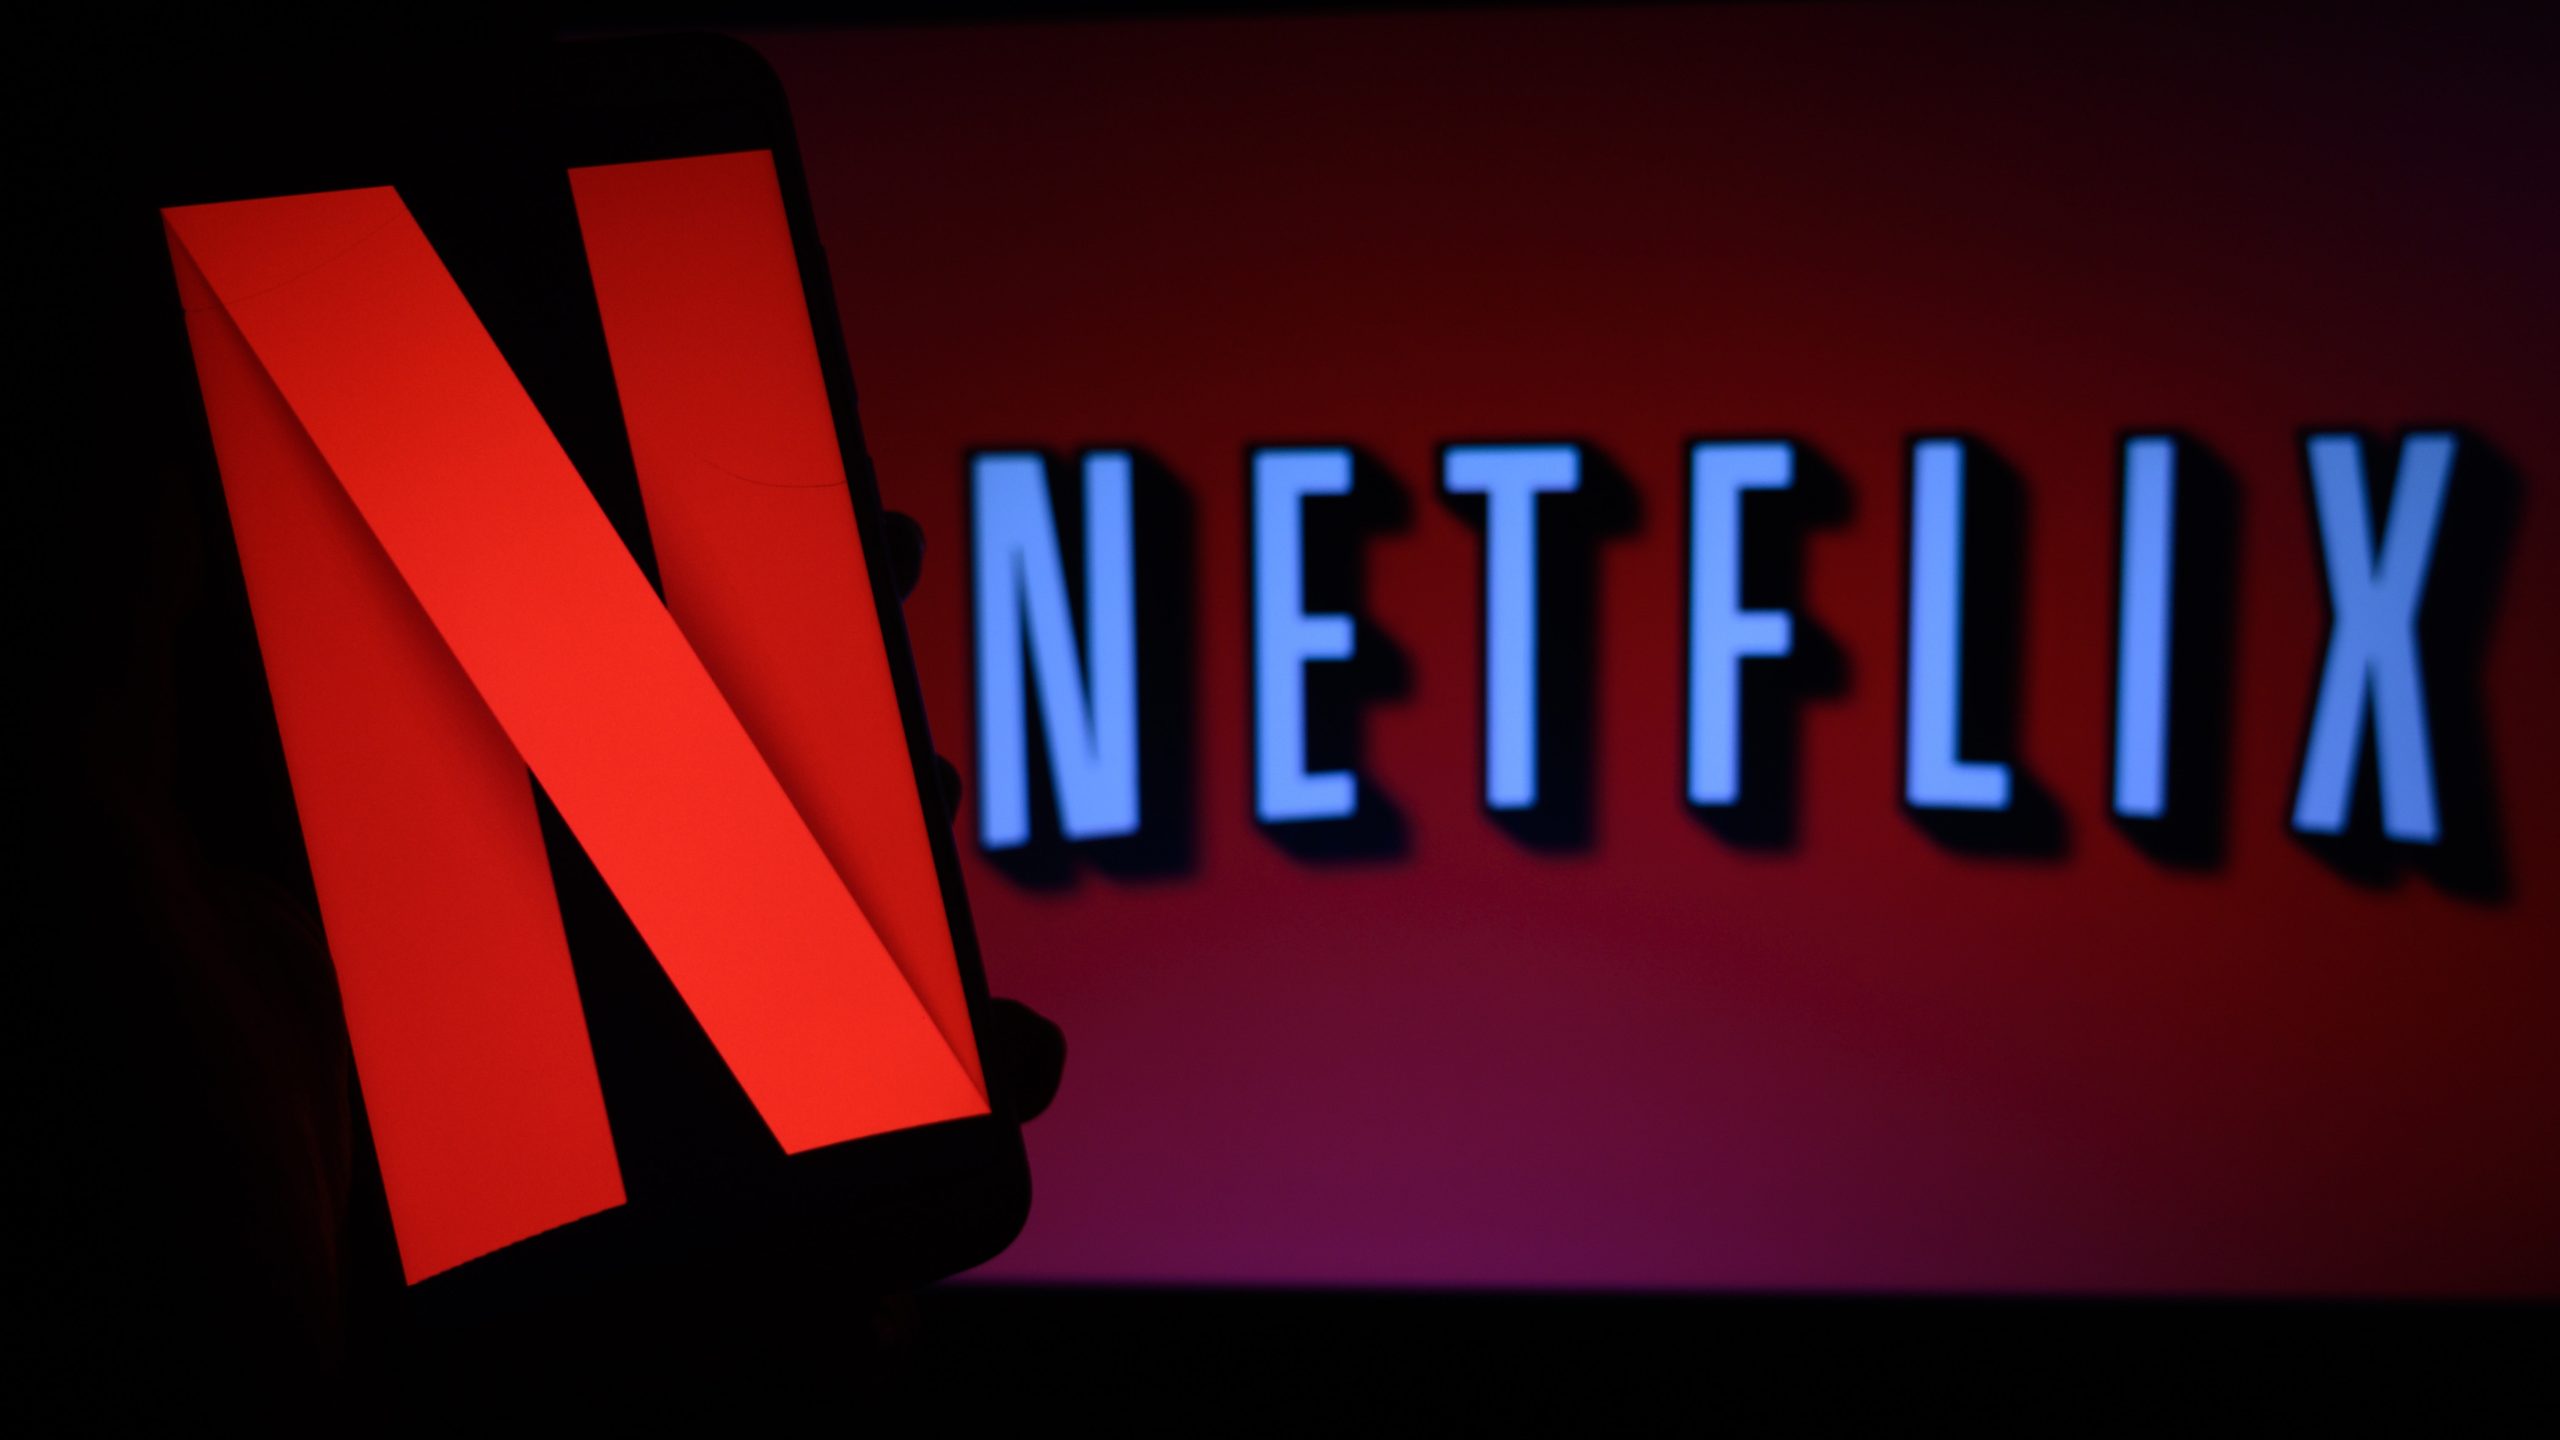 Netflix tells employees to spend company money 